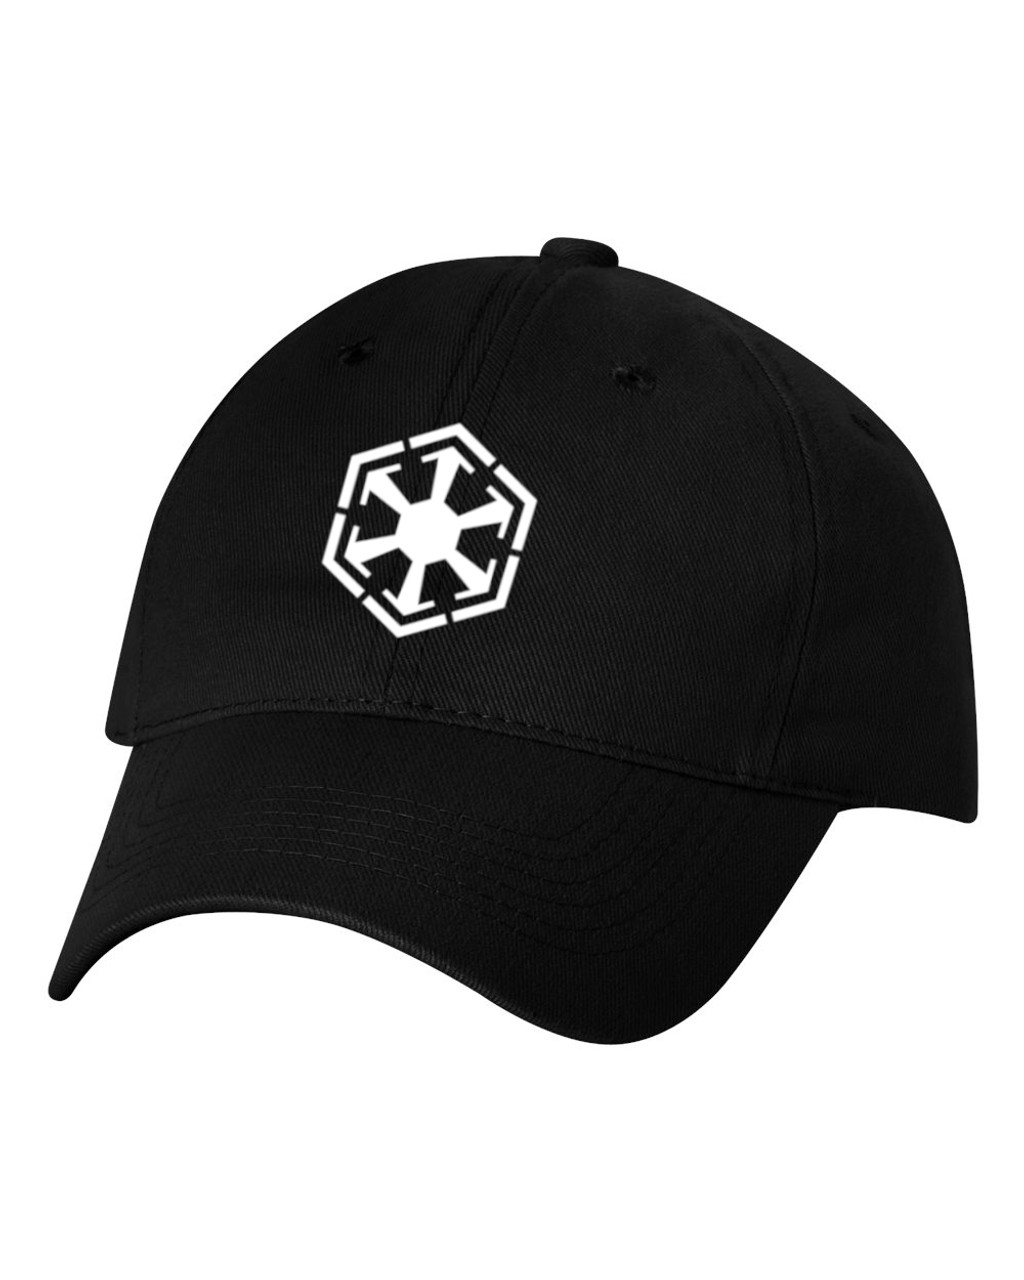 Star Force Sith Lord Dark Side Heat Pressed Hat - Adult Black Twill Adjustable Cap